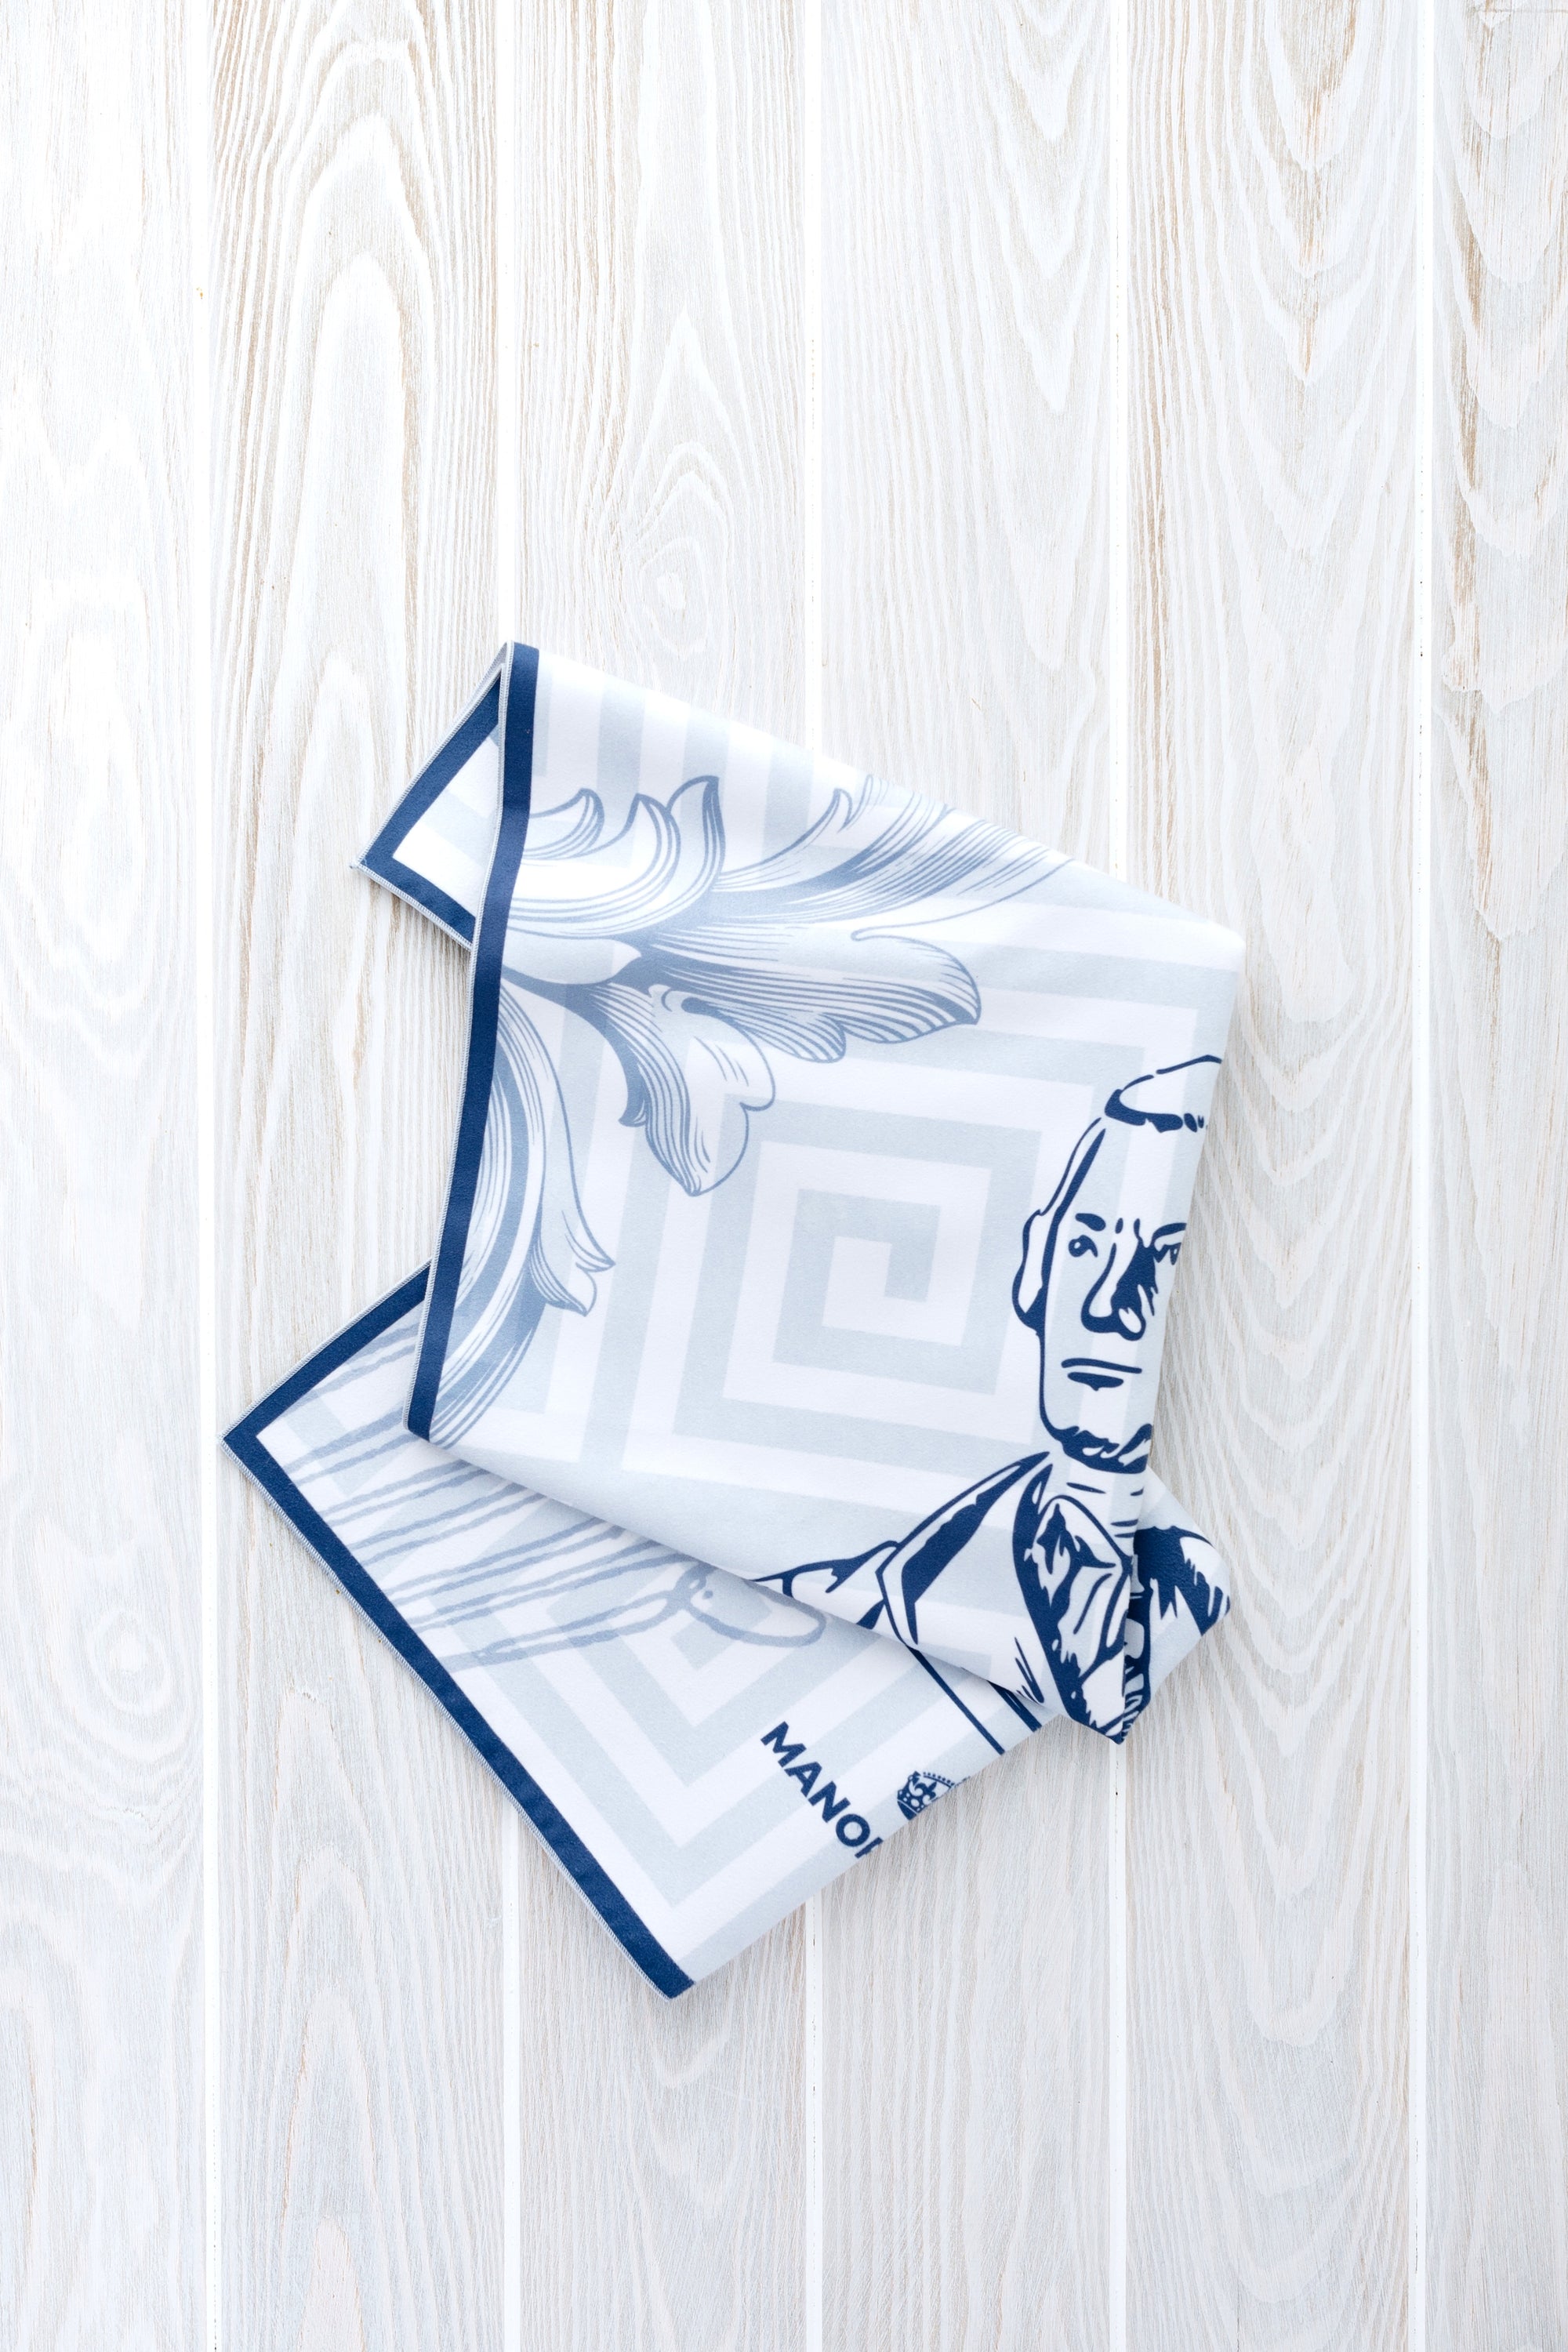 Manor Road Microfiber Tea Towel - Blue Greek